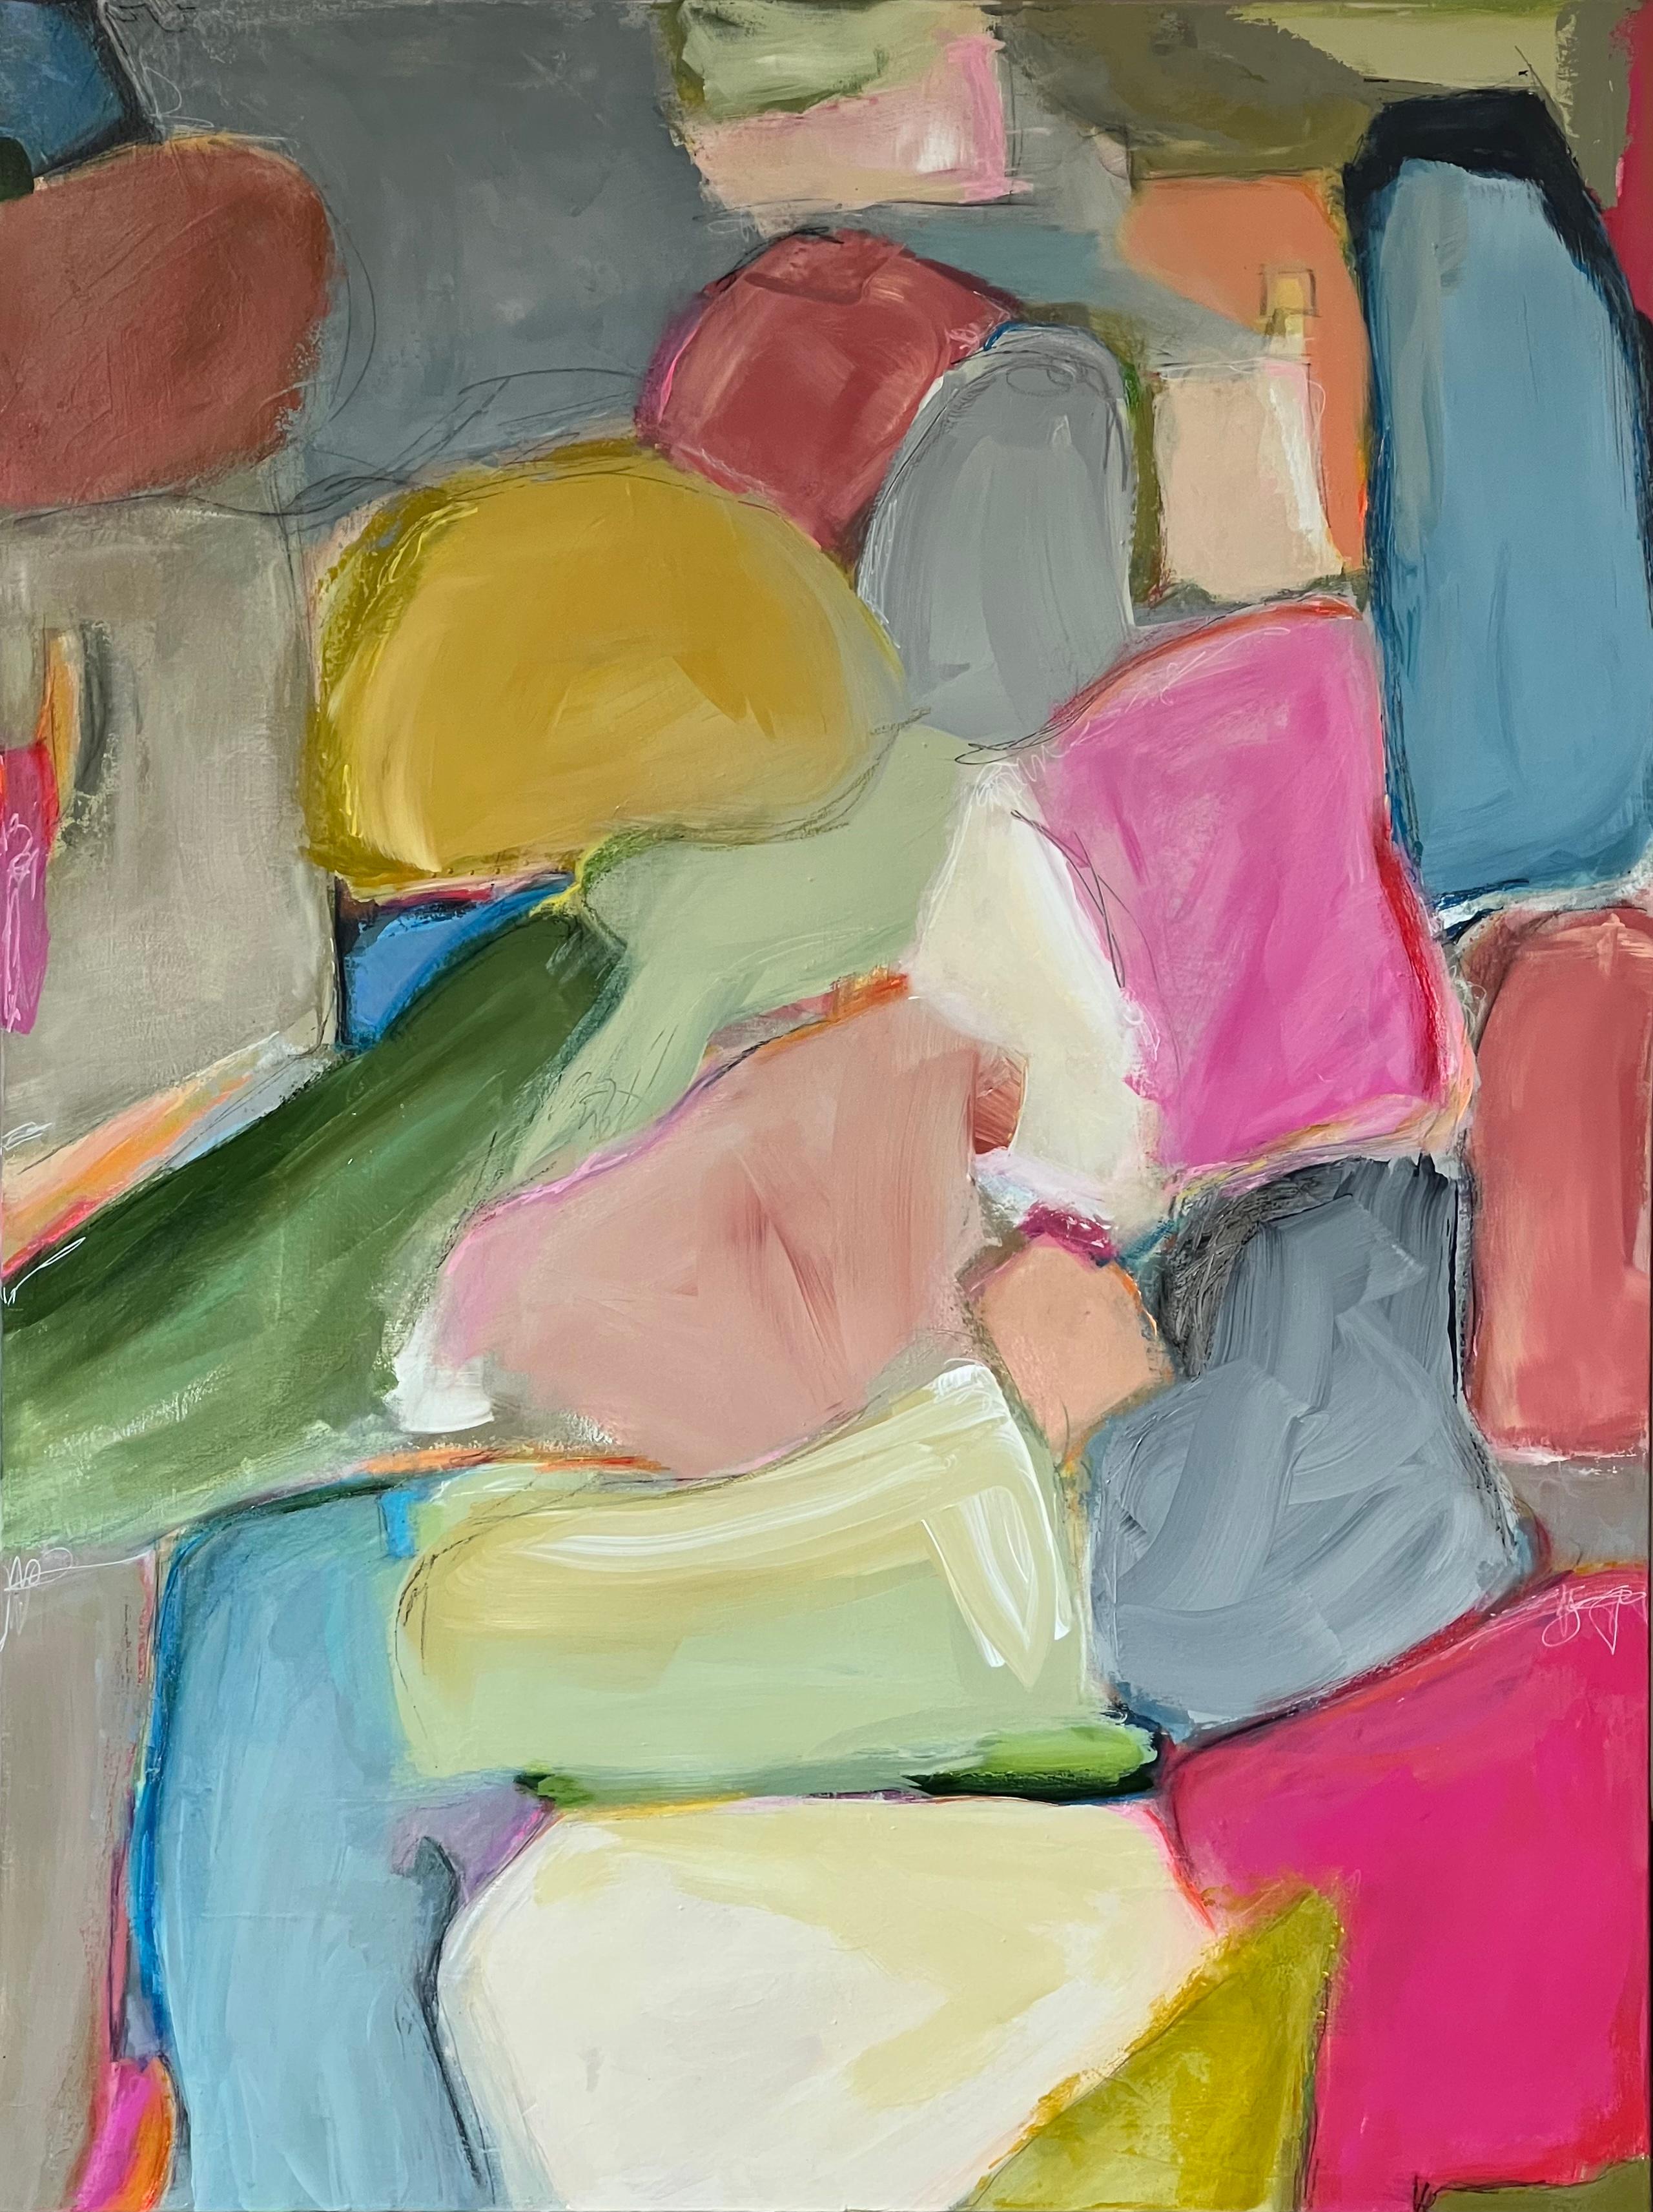 Dreaming About You (Abstrakt, Blau, Grün, Gold, Gelb, Rosa) (Abstrakter Expressionismus), Painting, von Kelley Carman